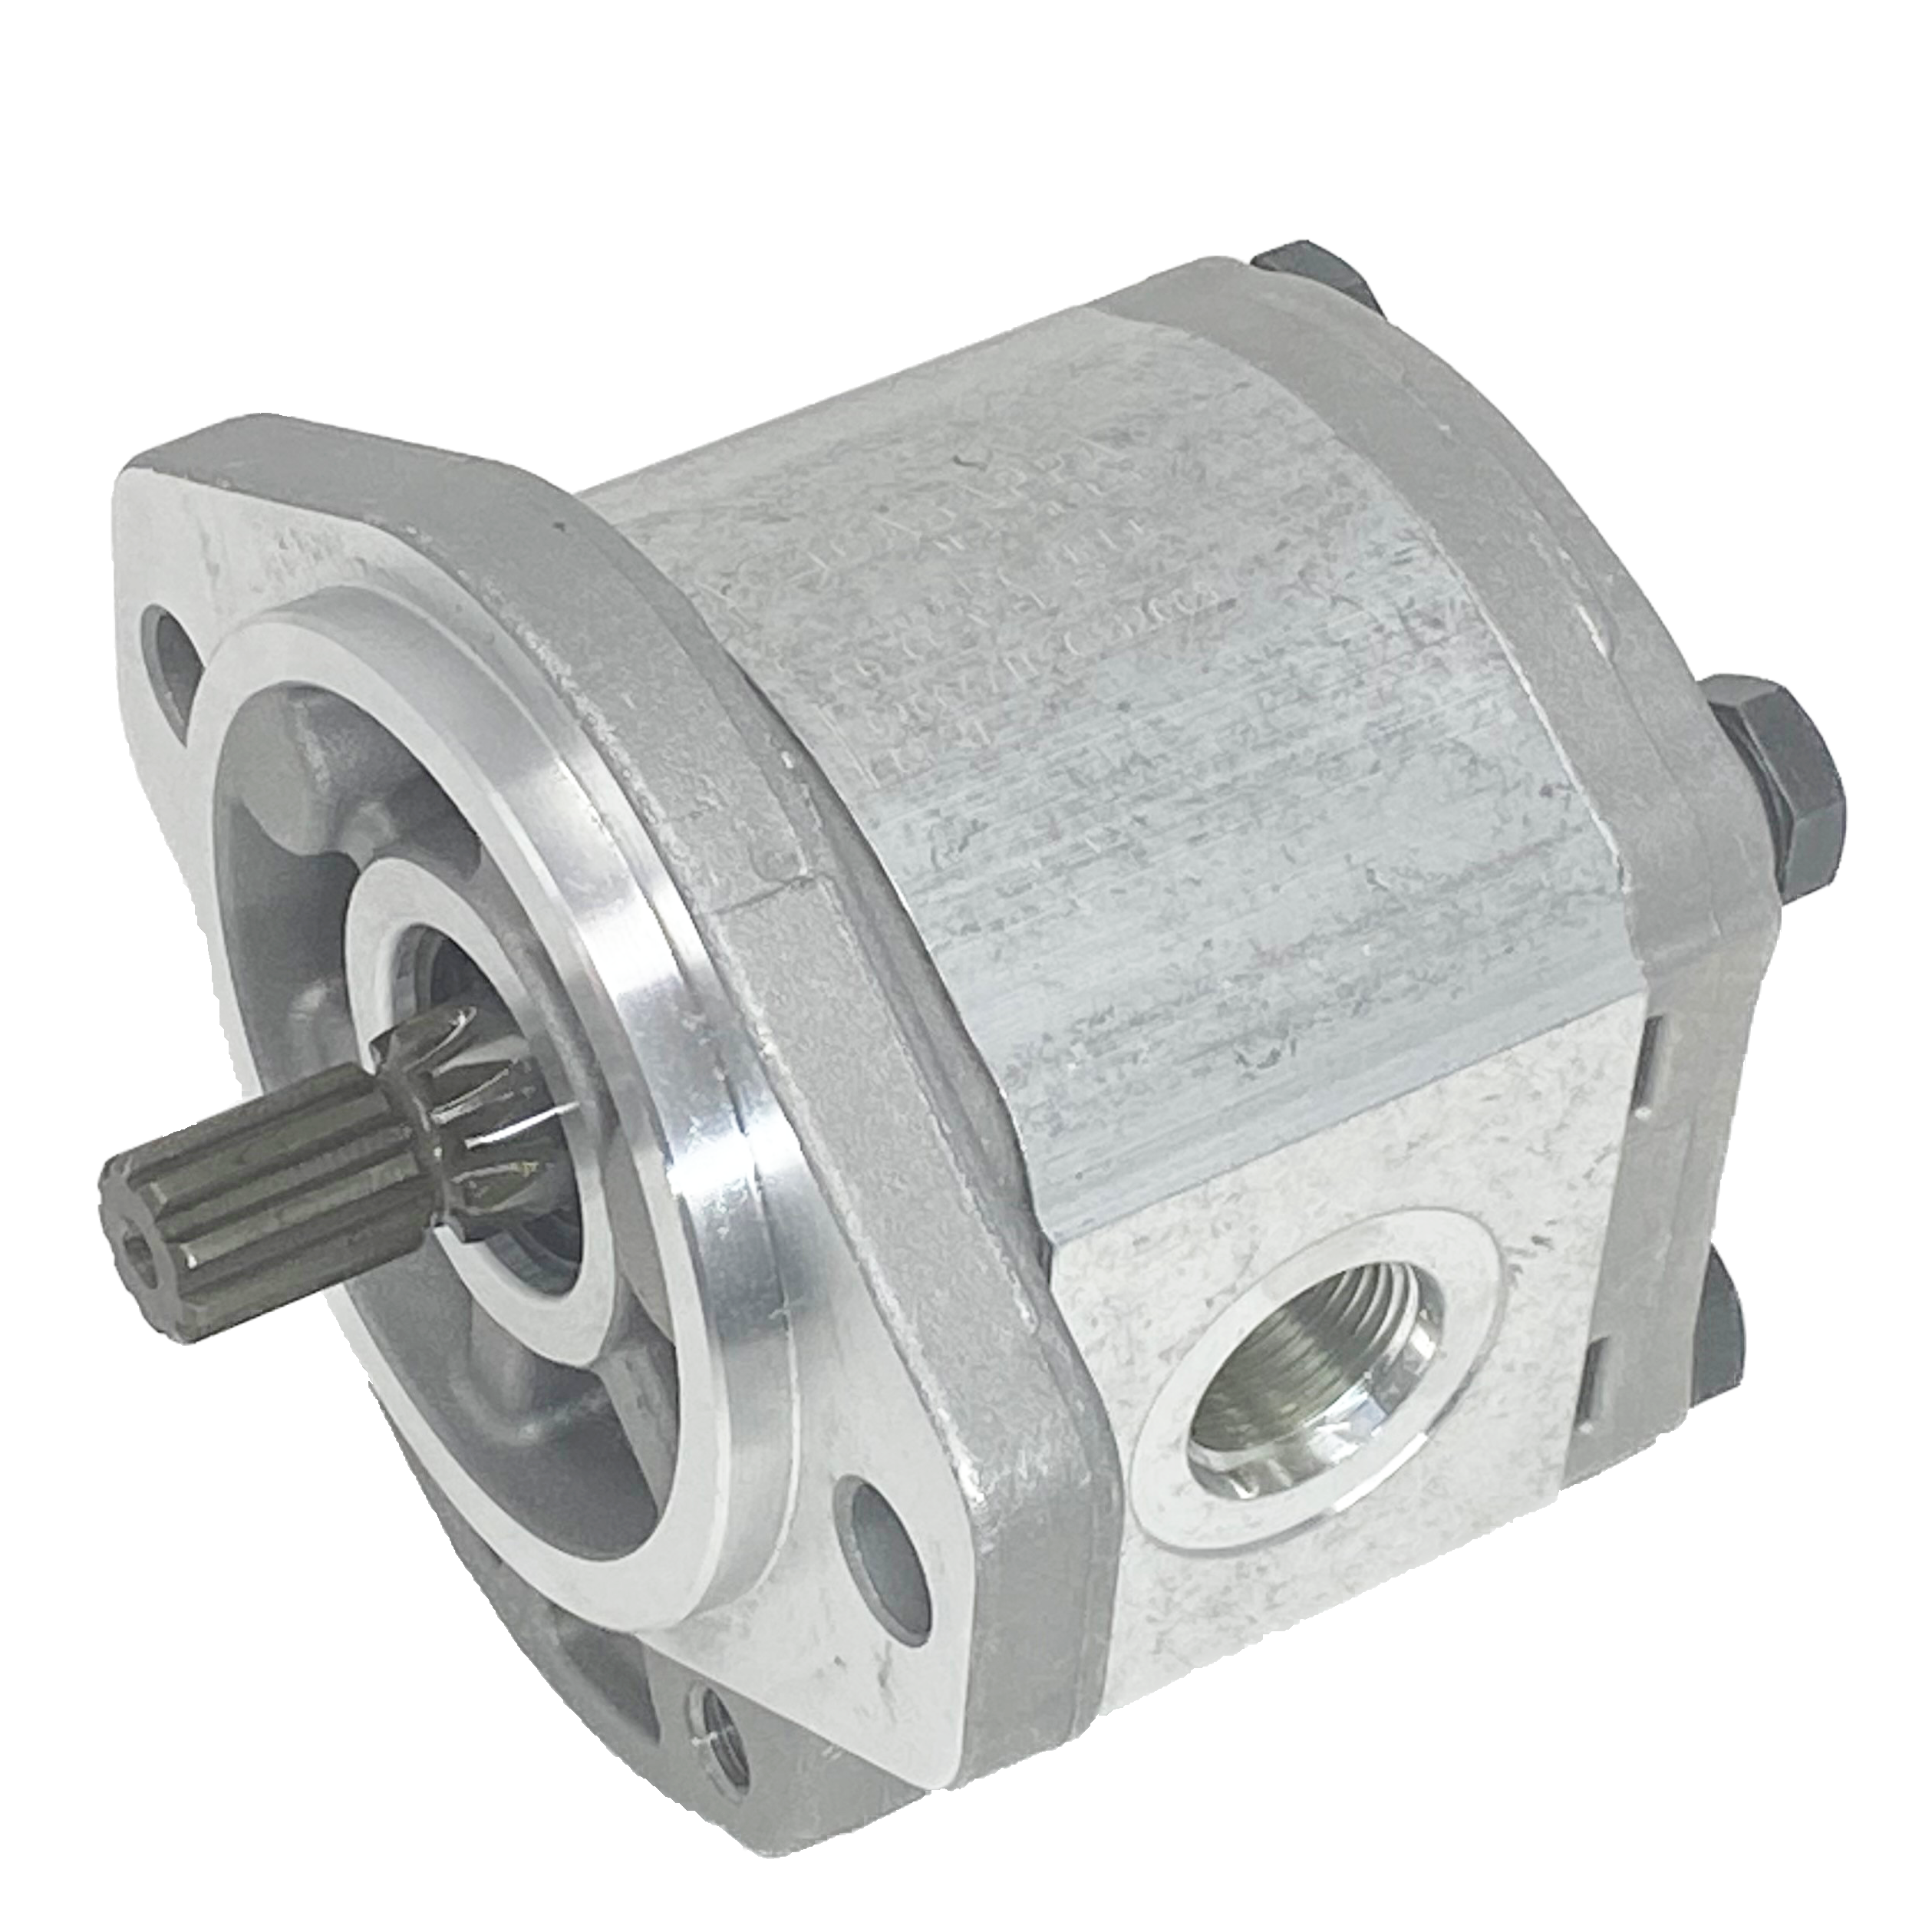 PLM20.11,2B0-07S1-LOC/OC-N-EL : Casappa Polaris Gear Motor, 11.23cc, 3625psi Rated, 3500RPM, Reversible Interior Drain, 11T 16/32dp Shaft, SAE A 2-Bolt Flange, 0.625 (5/8") #10 SAE Inlet, 0.625 (5/8") #10 SAE Outlet, Aluminum Body & Flange